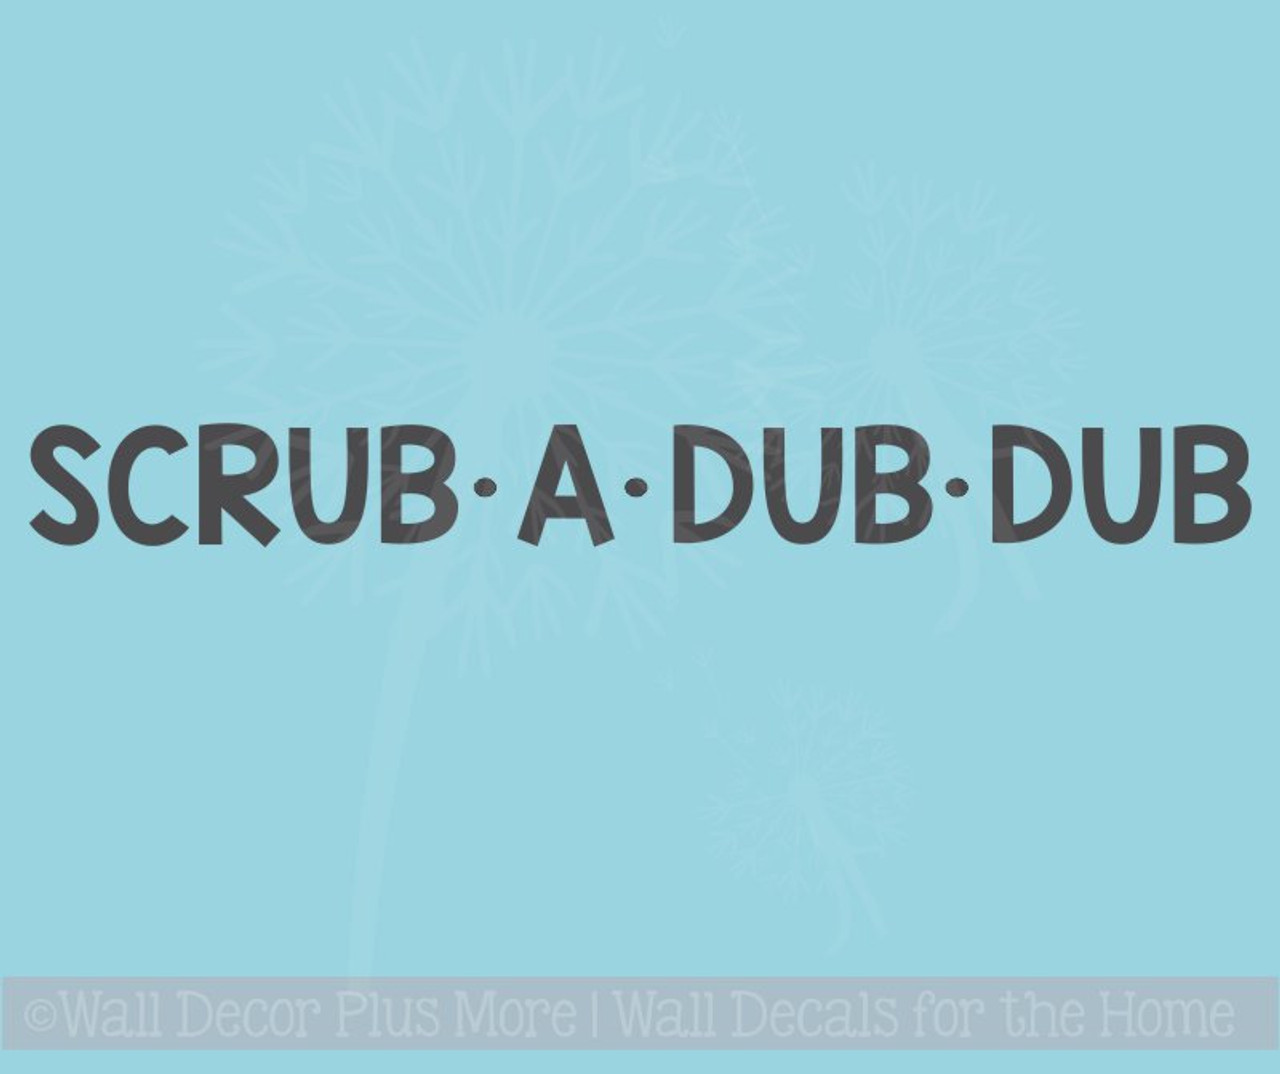 035 Rub A Dub Dub Bathroom Wall Art Sticker Quote 